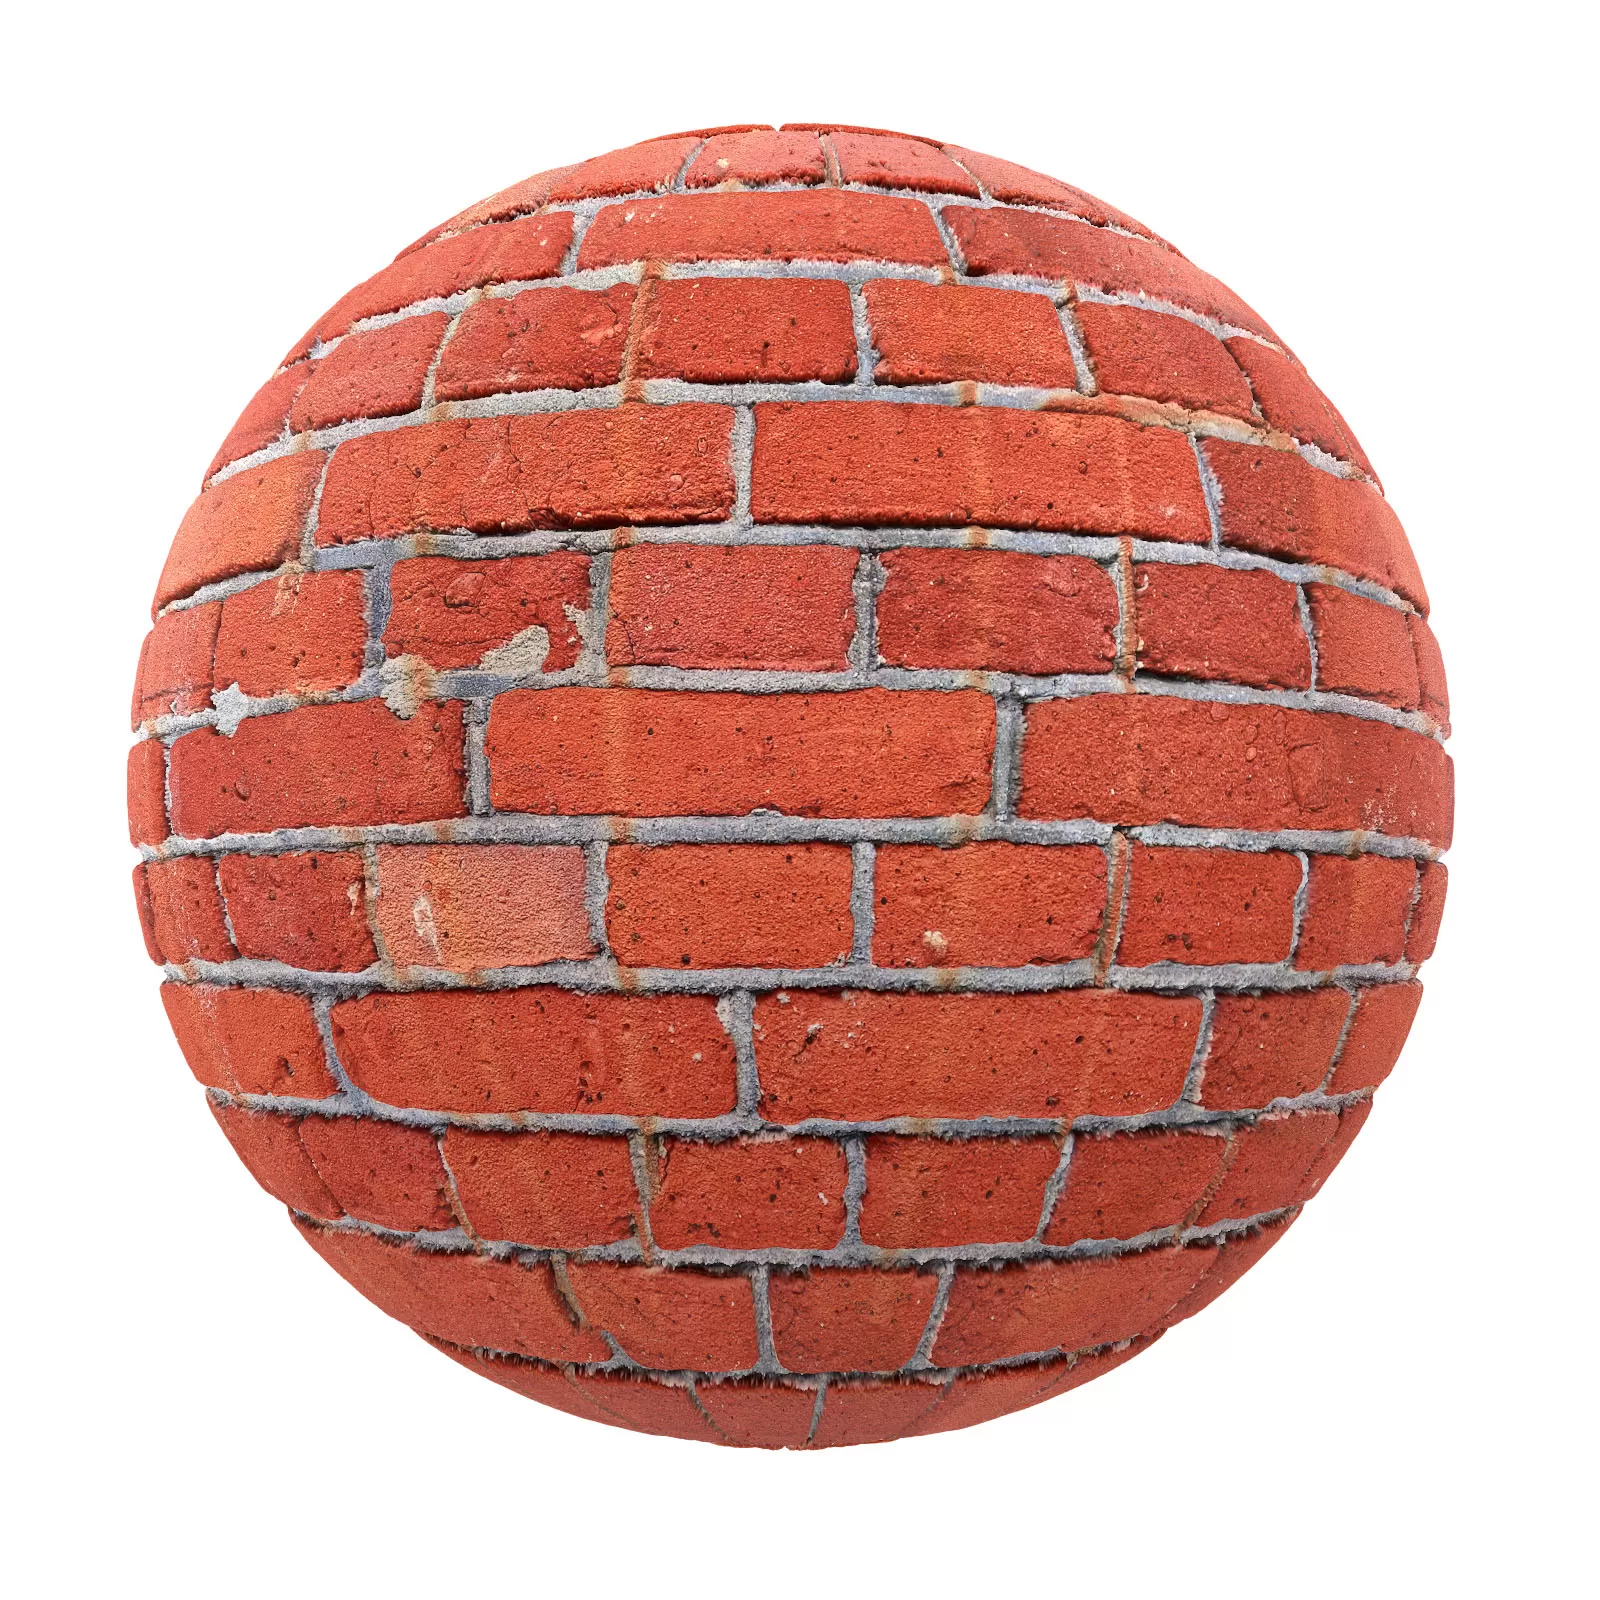 PBR CGAXIS TEXTURES – BRICK – Red Brick Wall 17